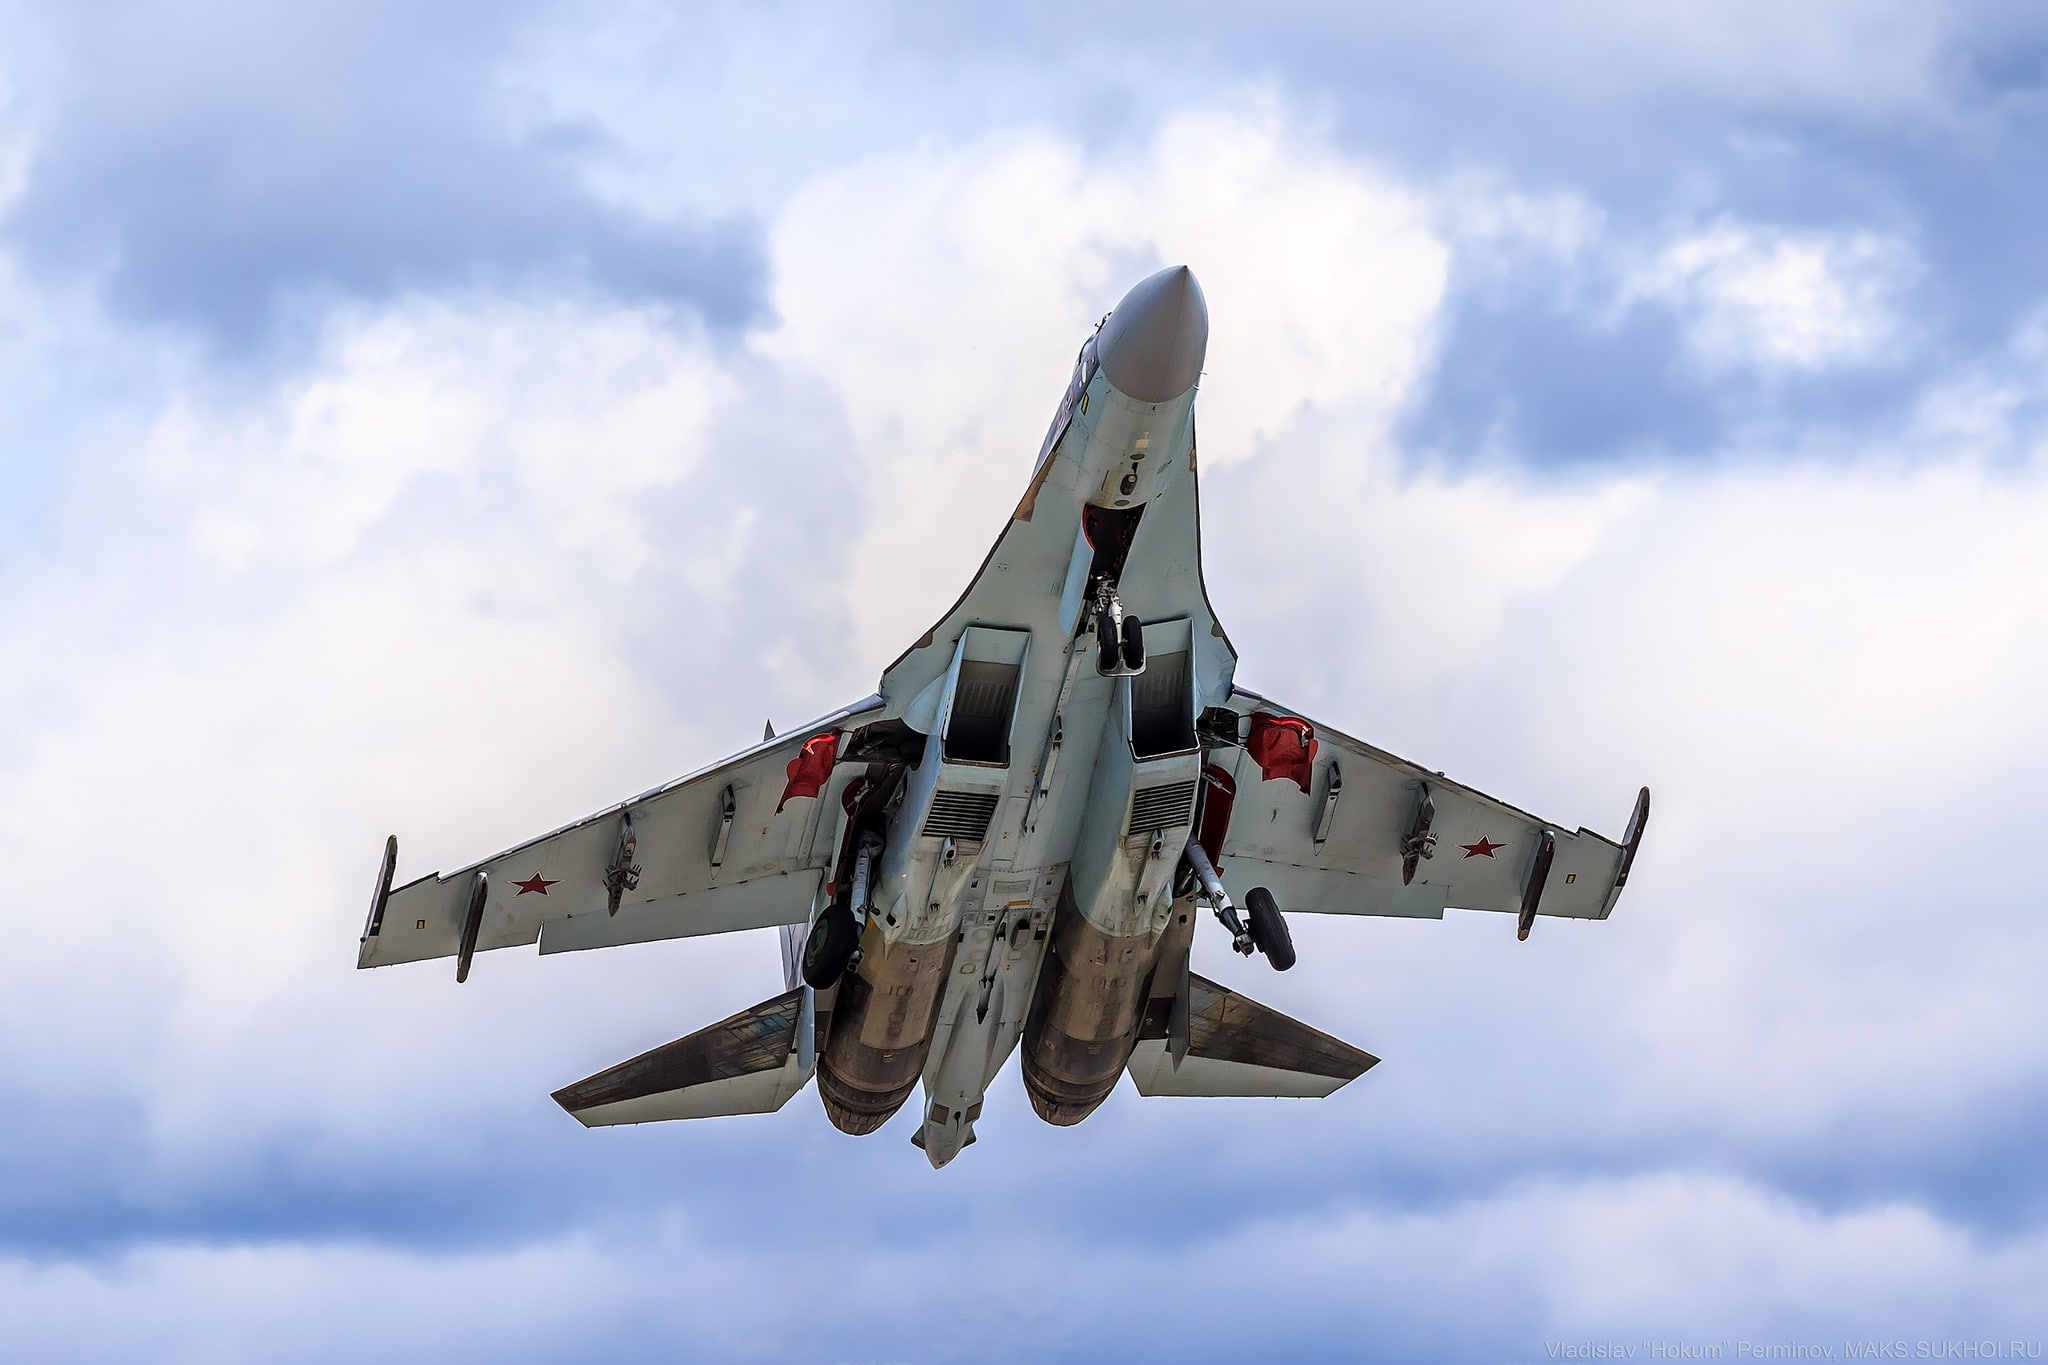 Russian Air Force, Sukhoi Su-35, warplanes, cloud - sky, air vehicle